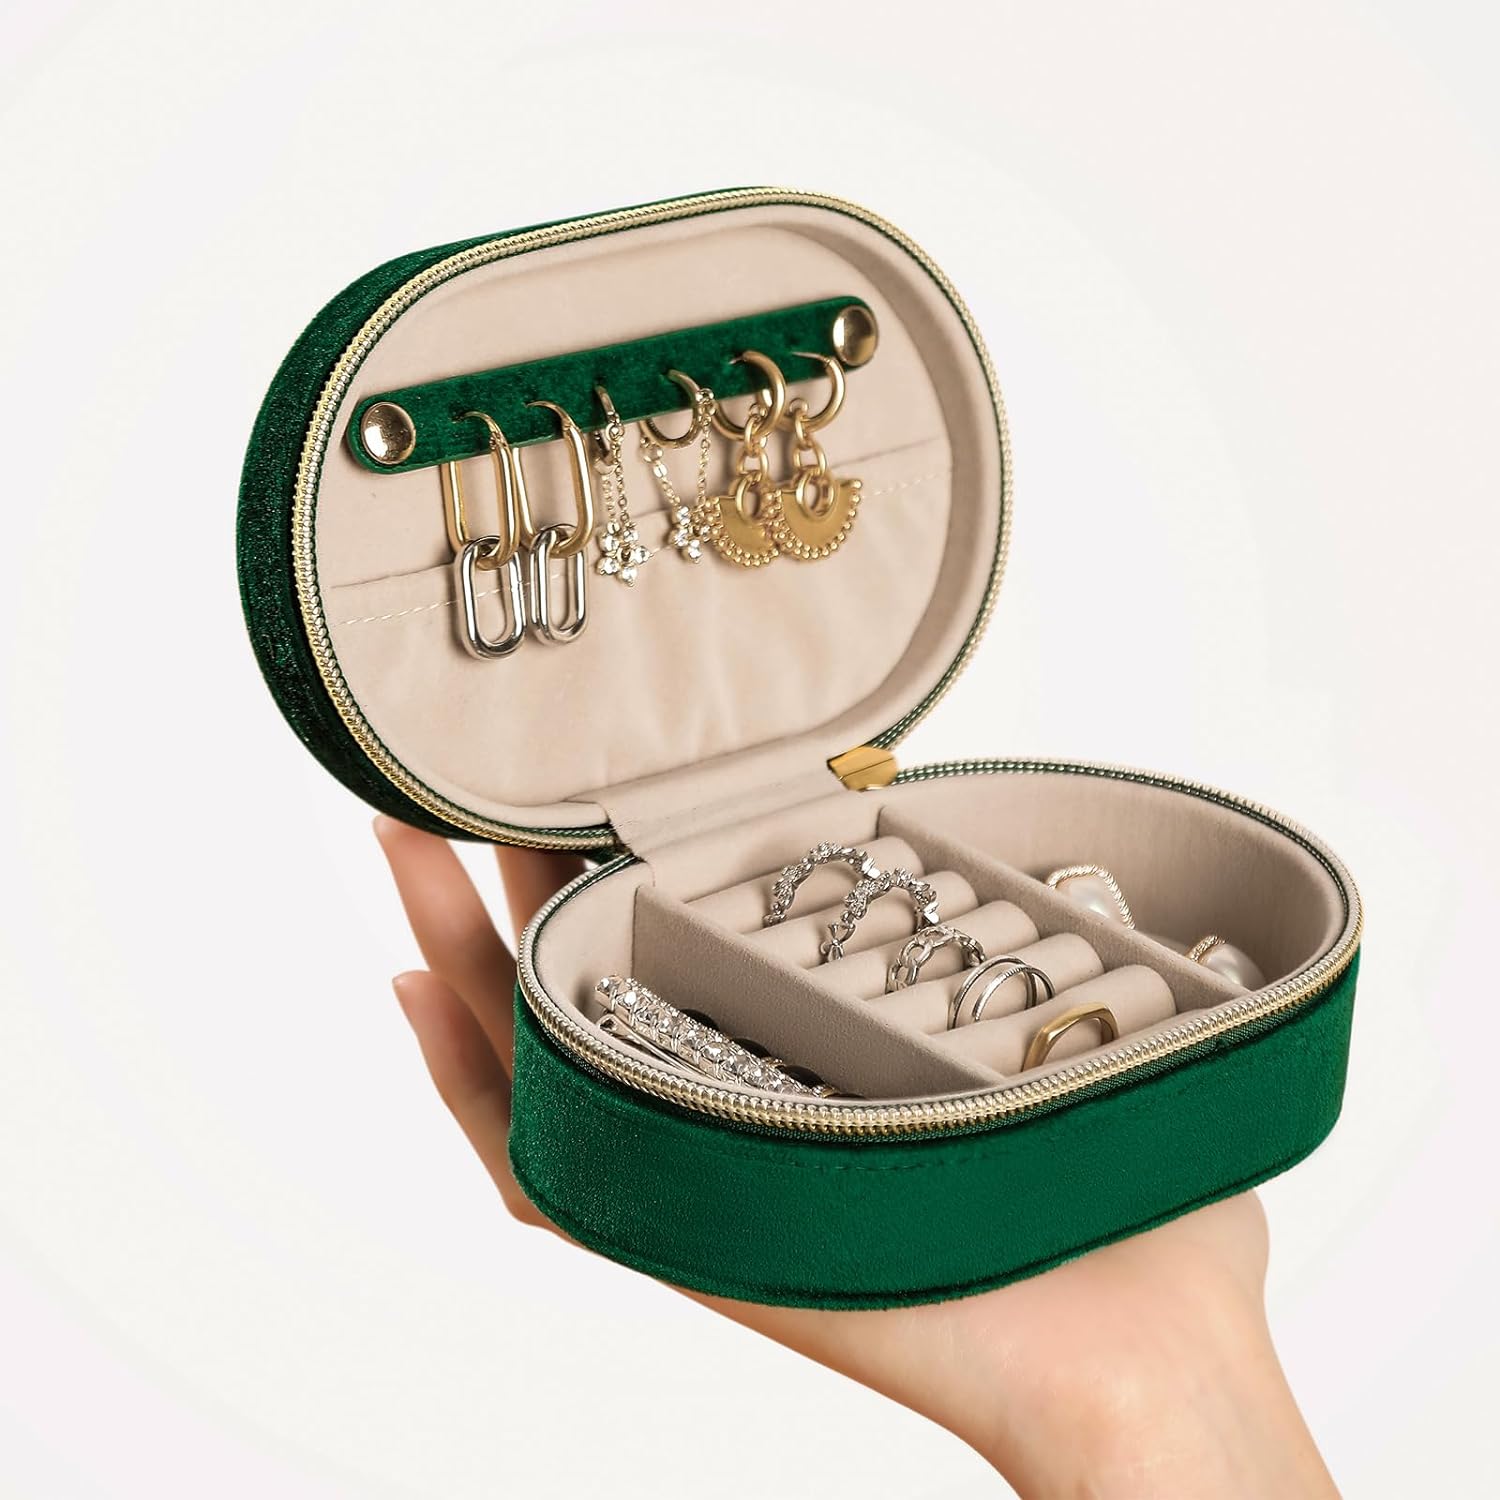 Changsuo Plush Velvet Jewelry Box for Traval, Small Jewelry Case for Women, Jewelry Travel Organizer